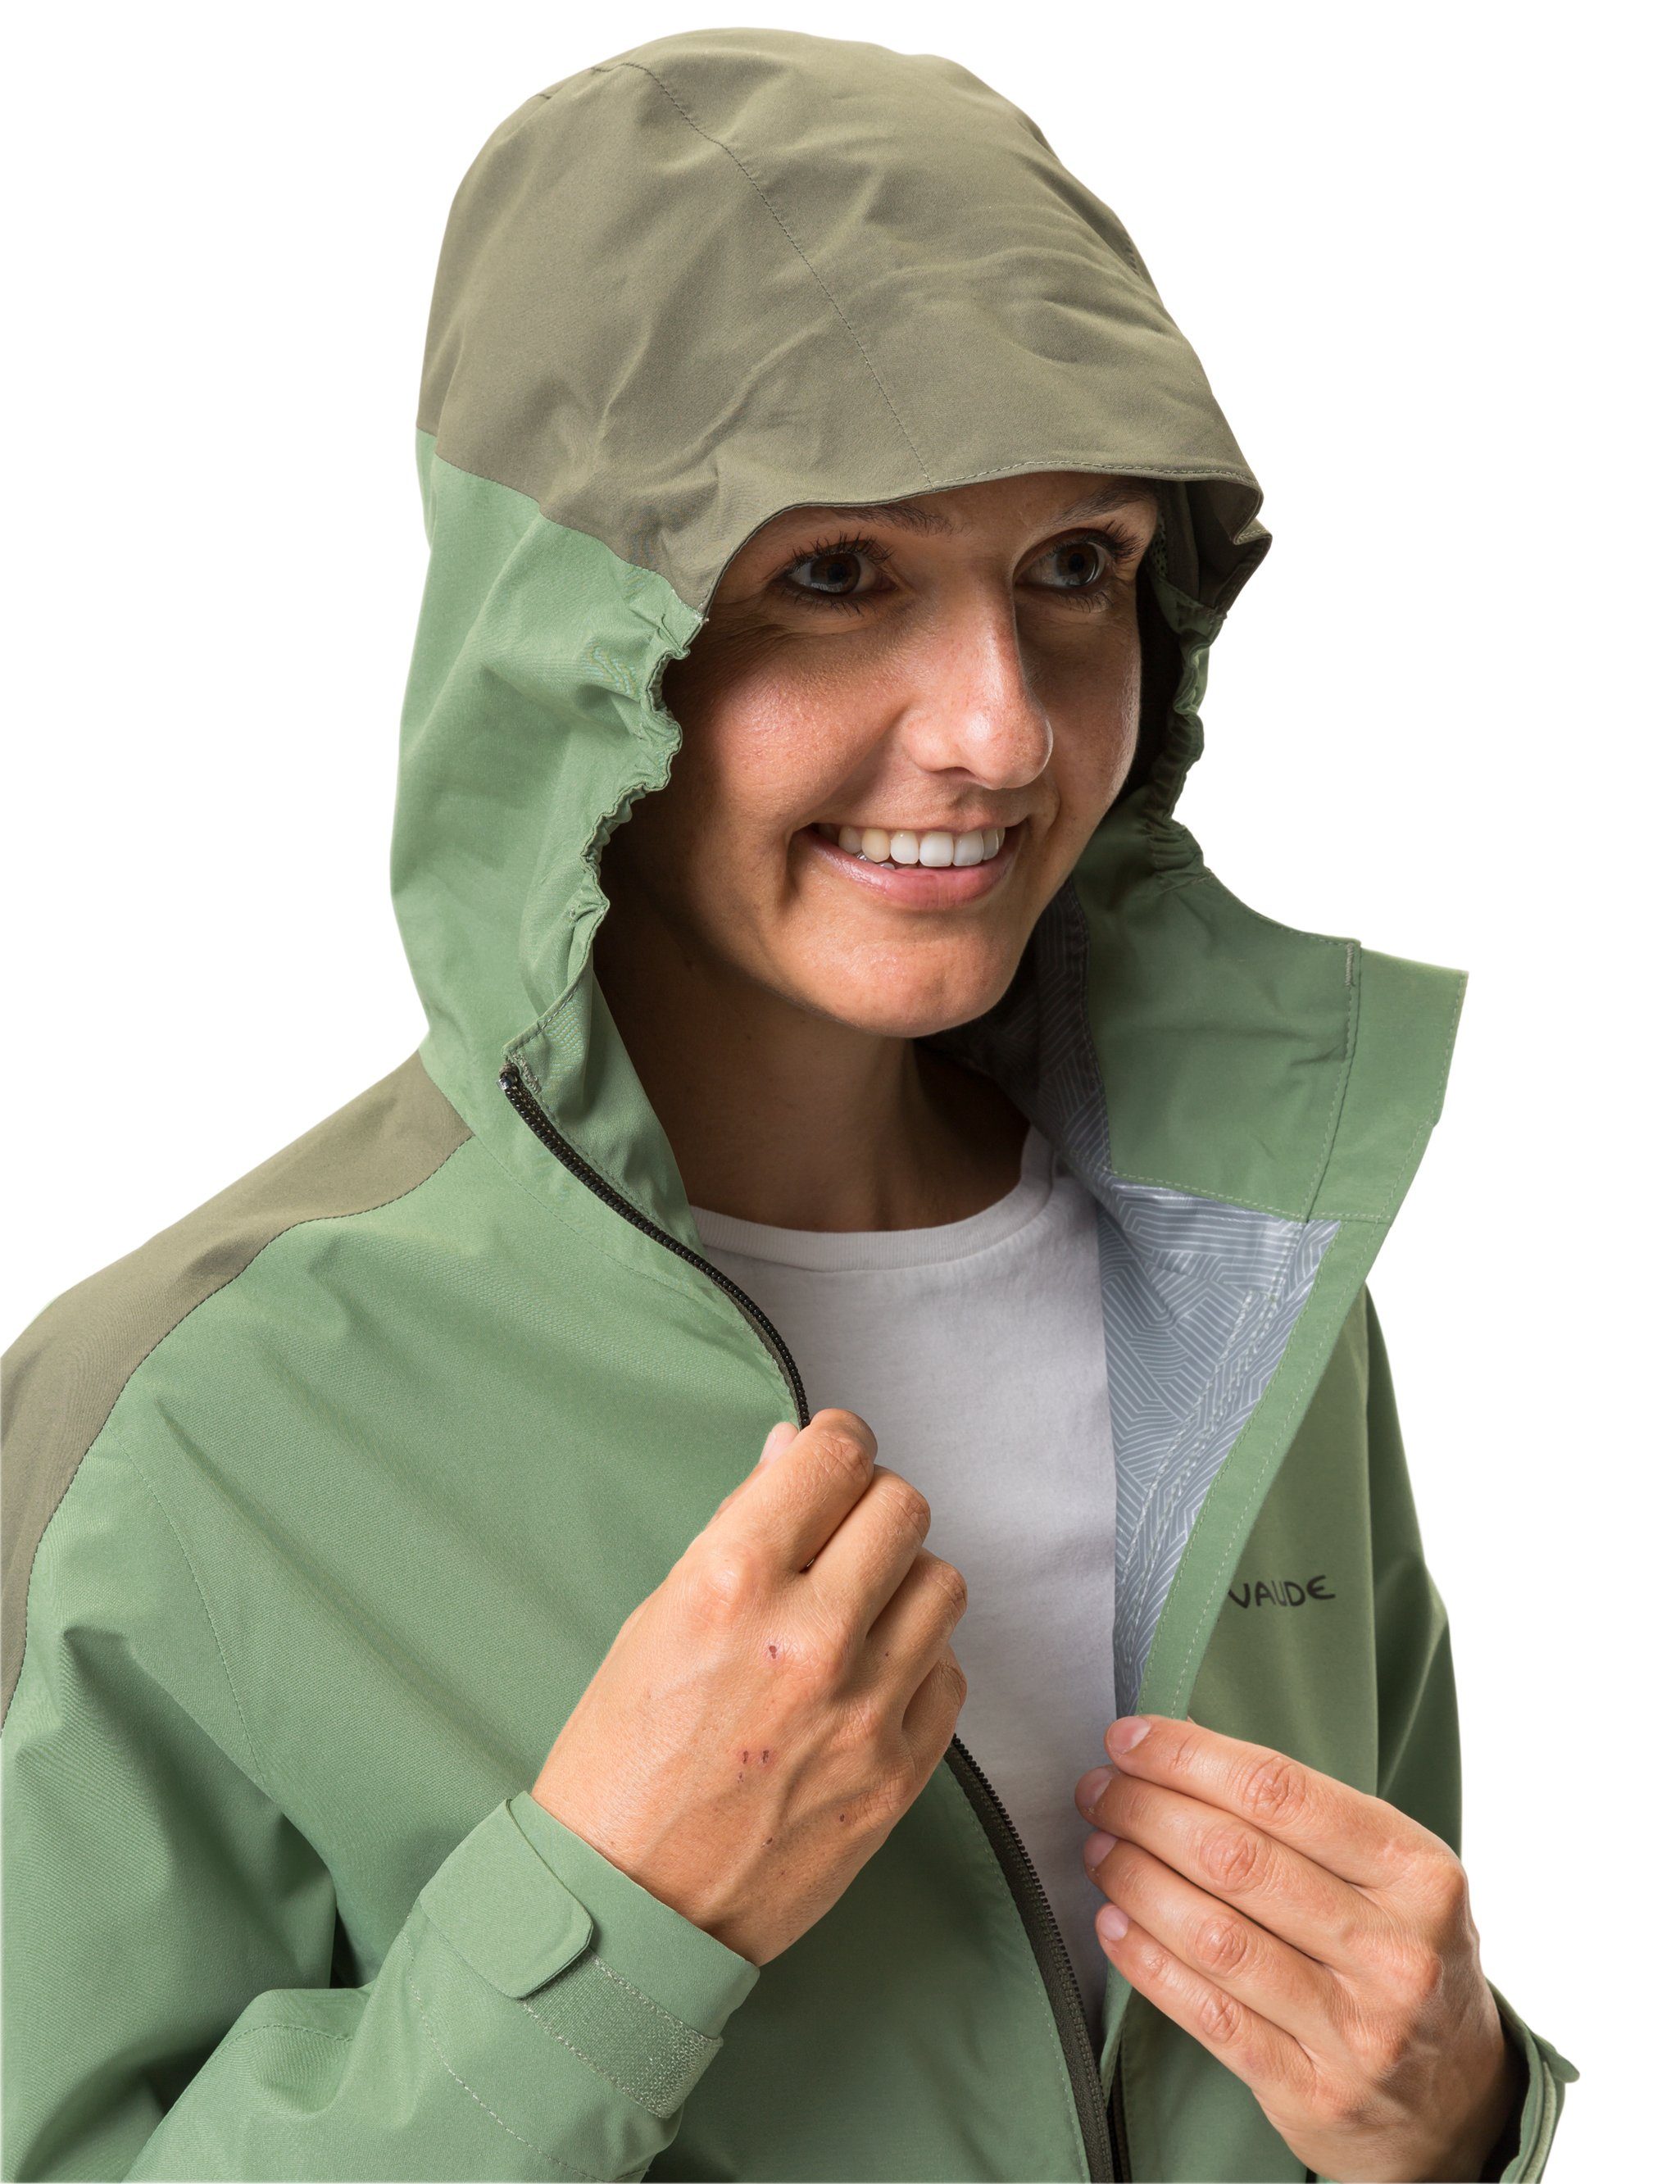 Women's (1-St) Outdoorjacke II green Klimaneutral kompensiert willow Moab Rain Jacket VAUDE